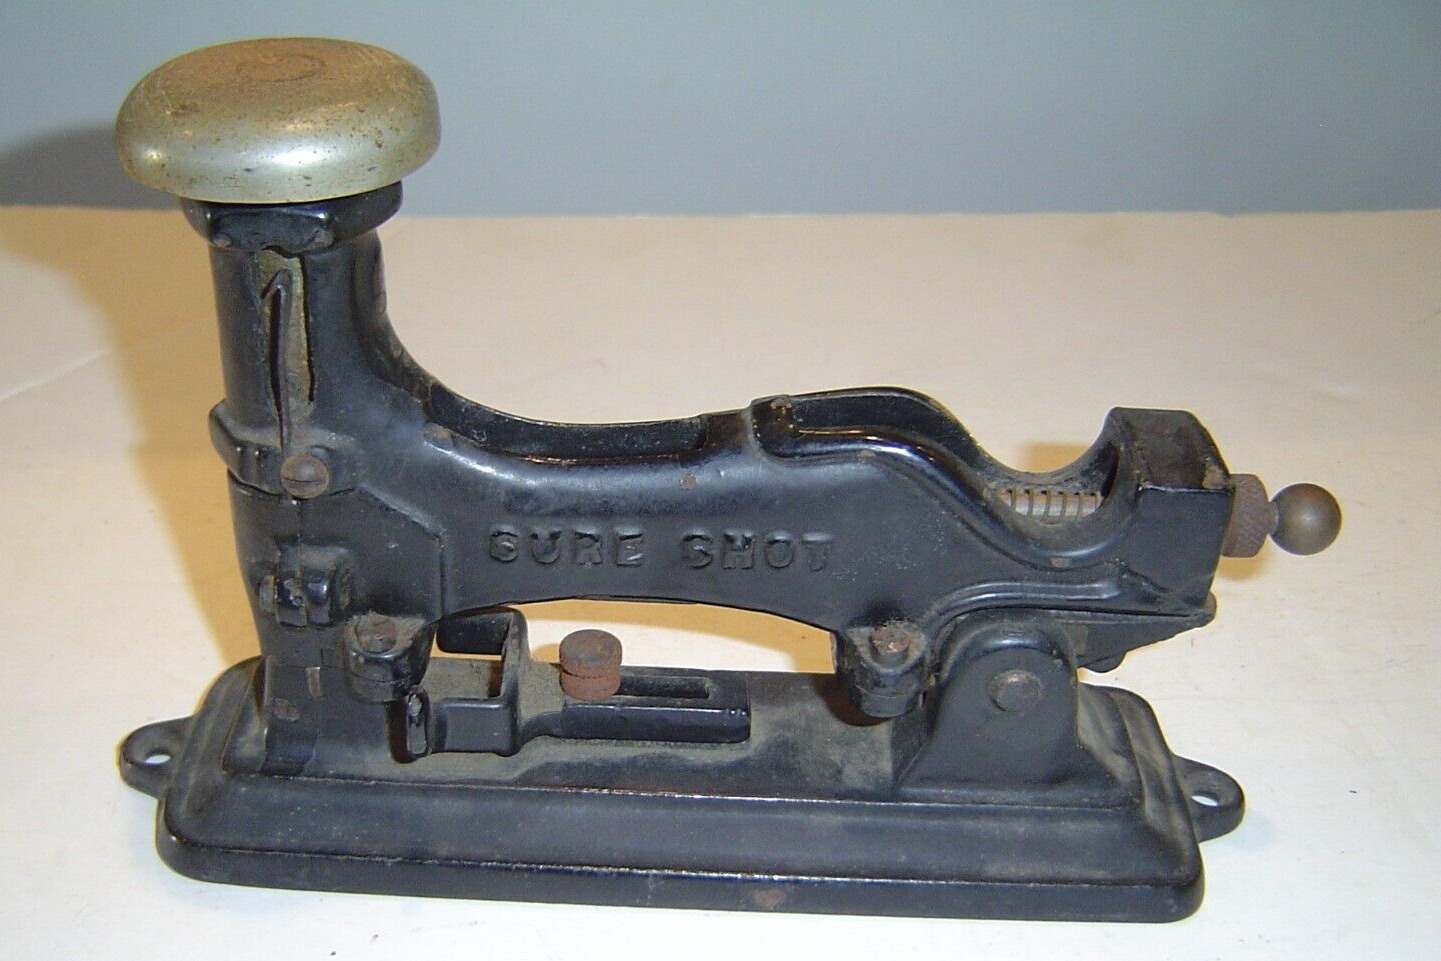 Antique Late 1800’s/Early 1900’s Cast-Iron Office Desk Acme Sure Shot Stapler